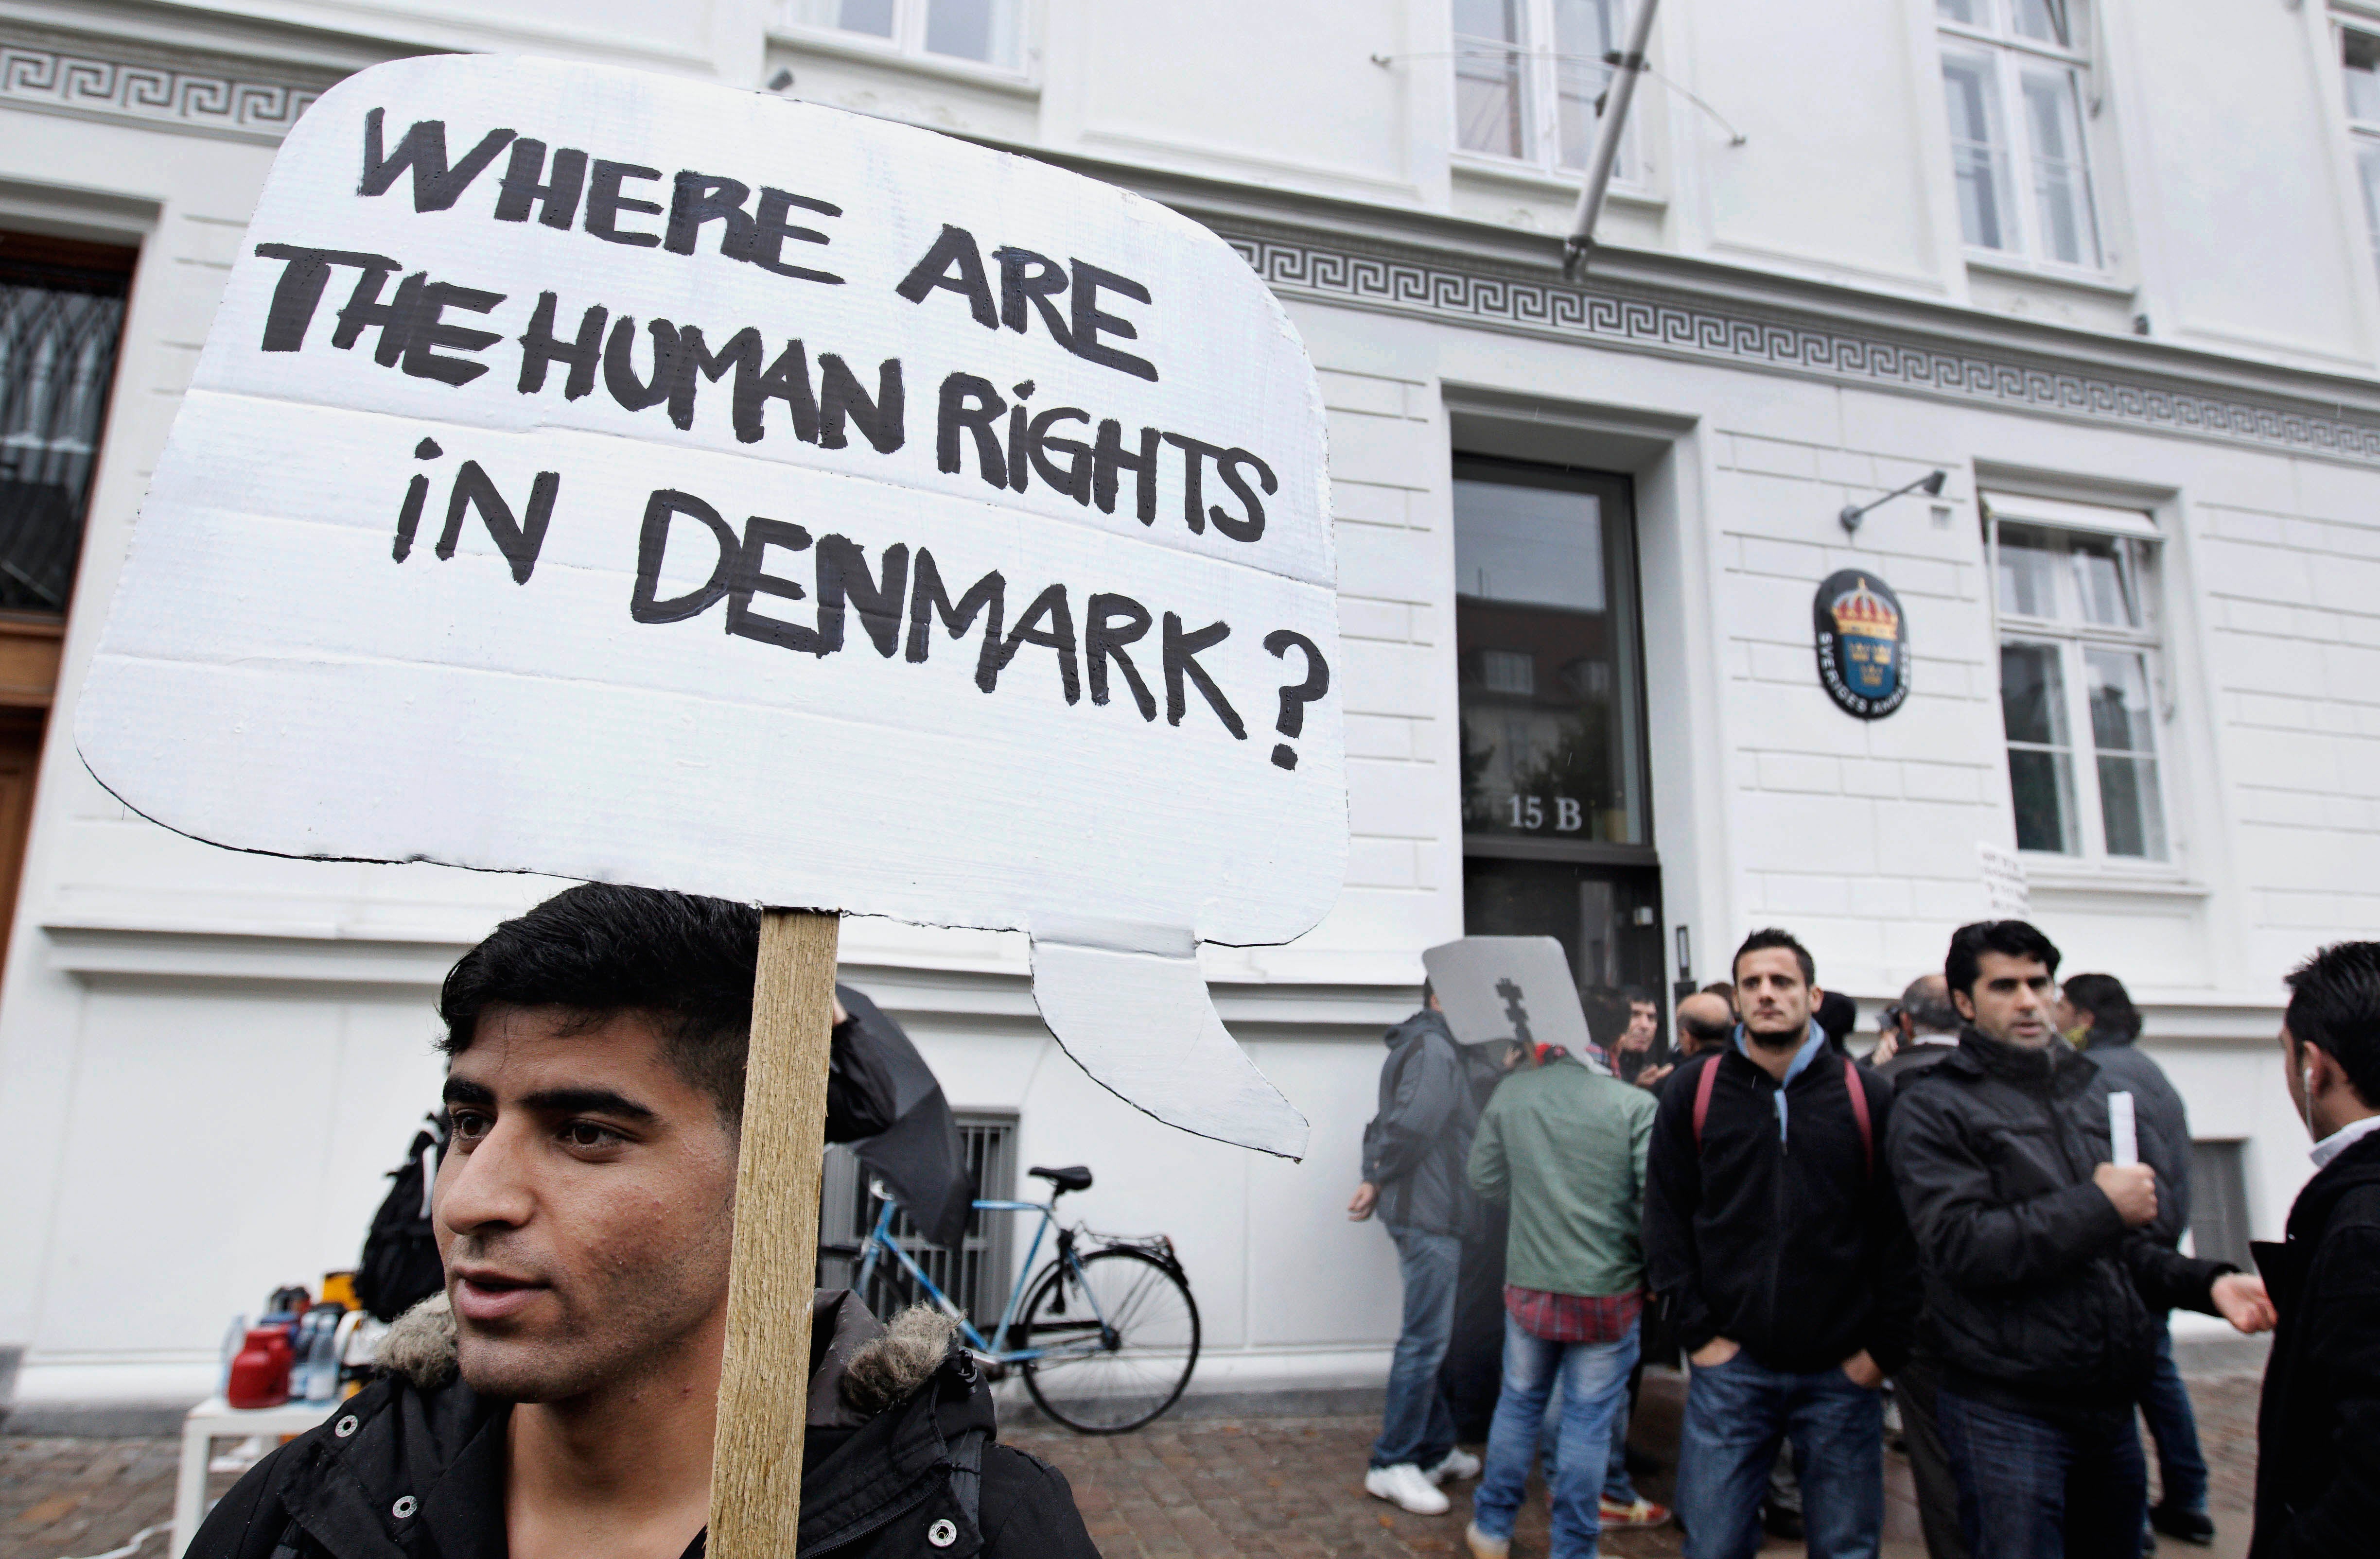 Syrian refugees hold banners outside the Swedish Embassy in Copenhagen, Denmark, protesting Denmark's asylum policies towards those who fled Syria's civil war, September 26, 2012.